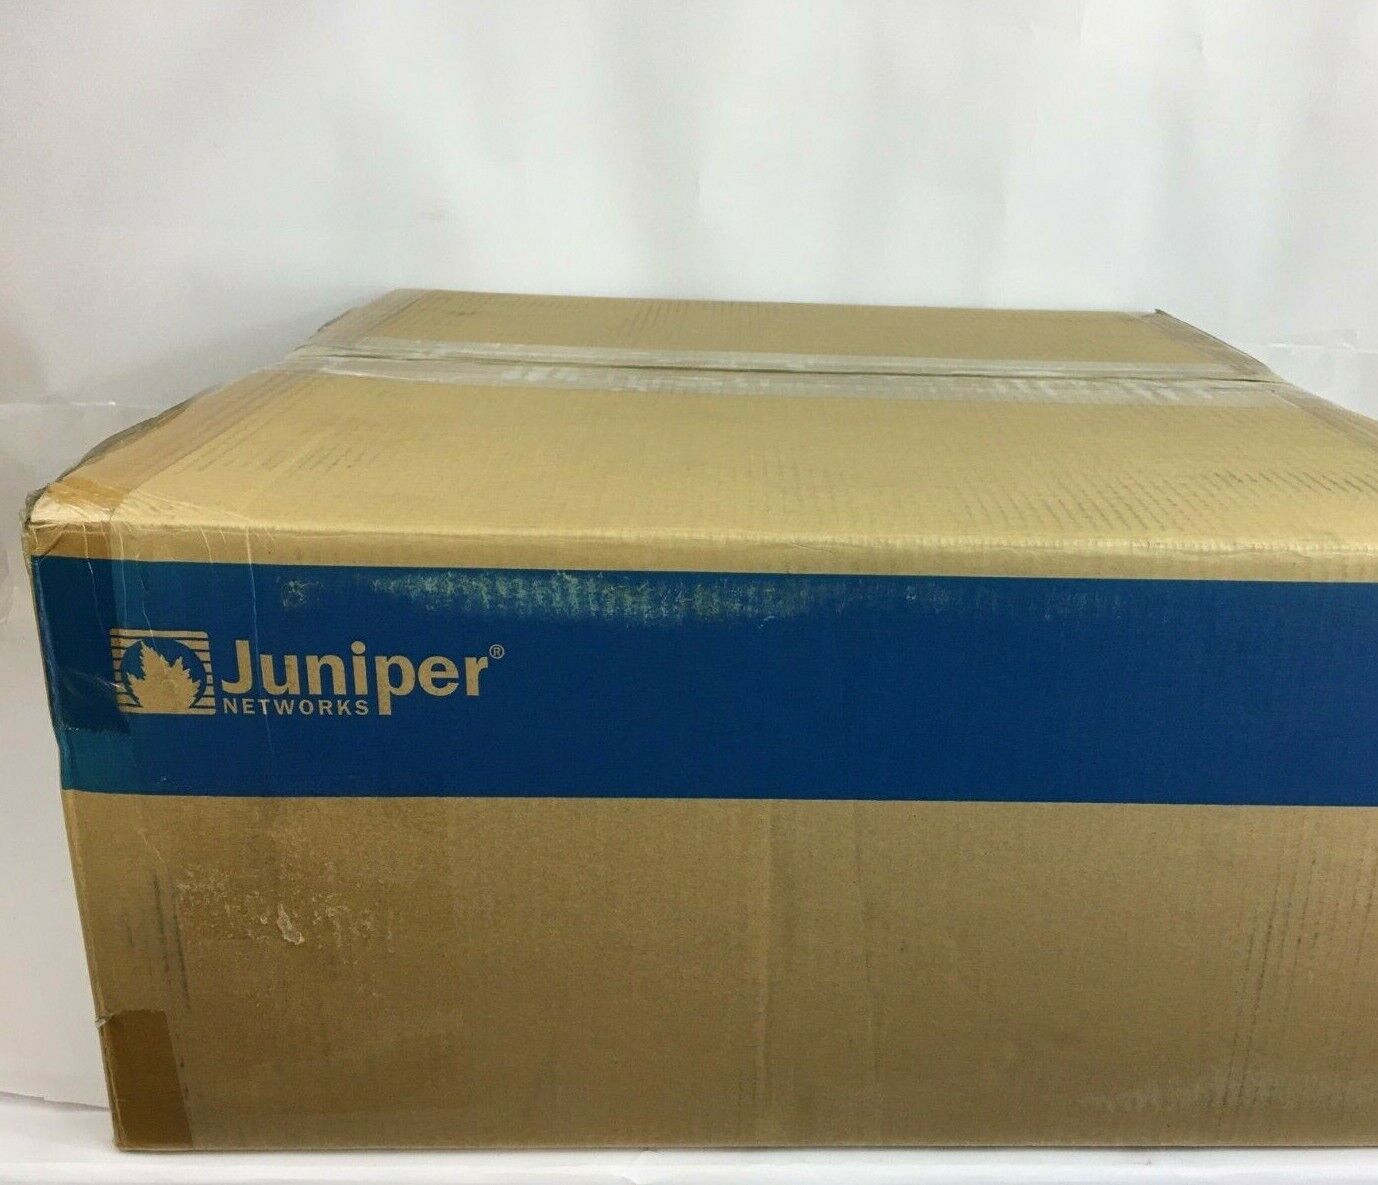 Juniper EX3200-24T 24-Port Managed Layer 3 Gigabit Switch